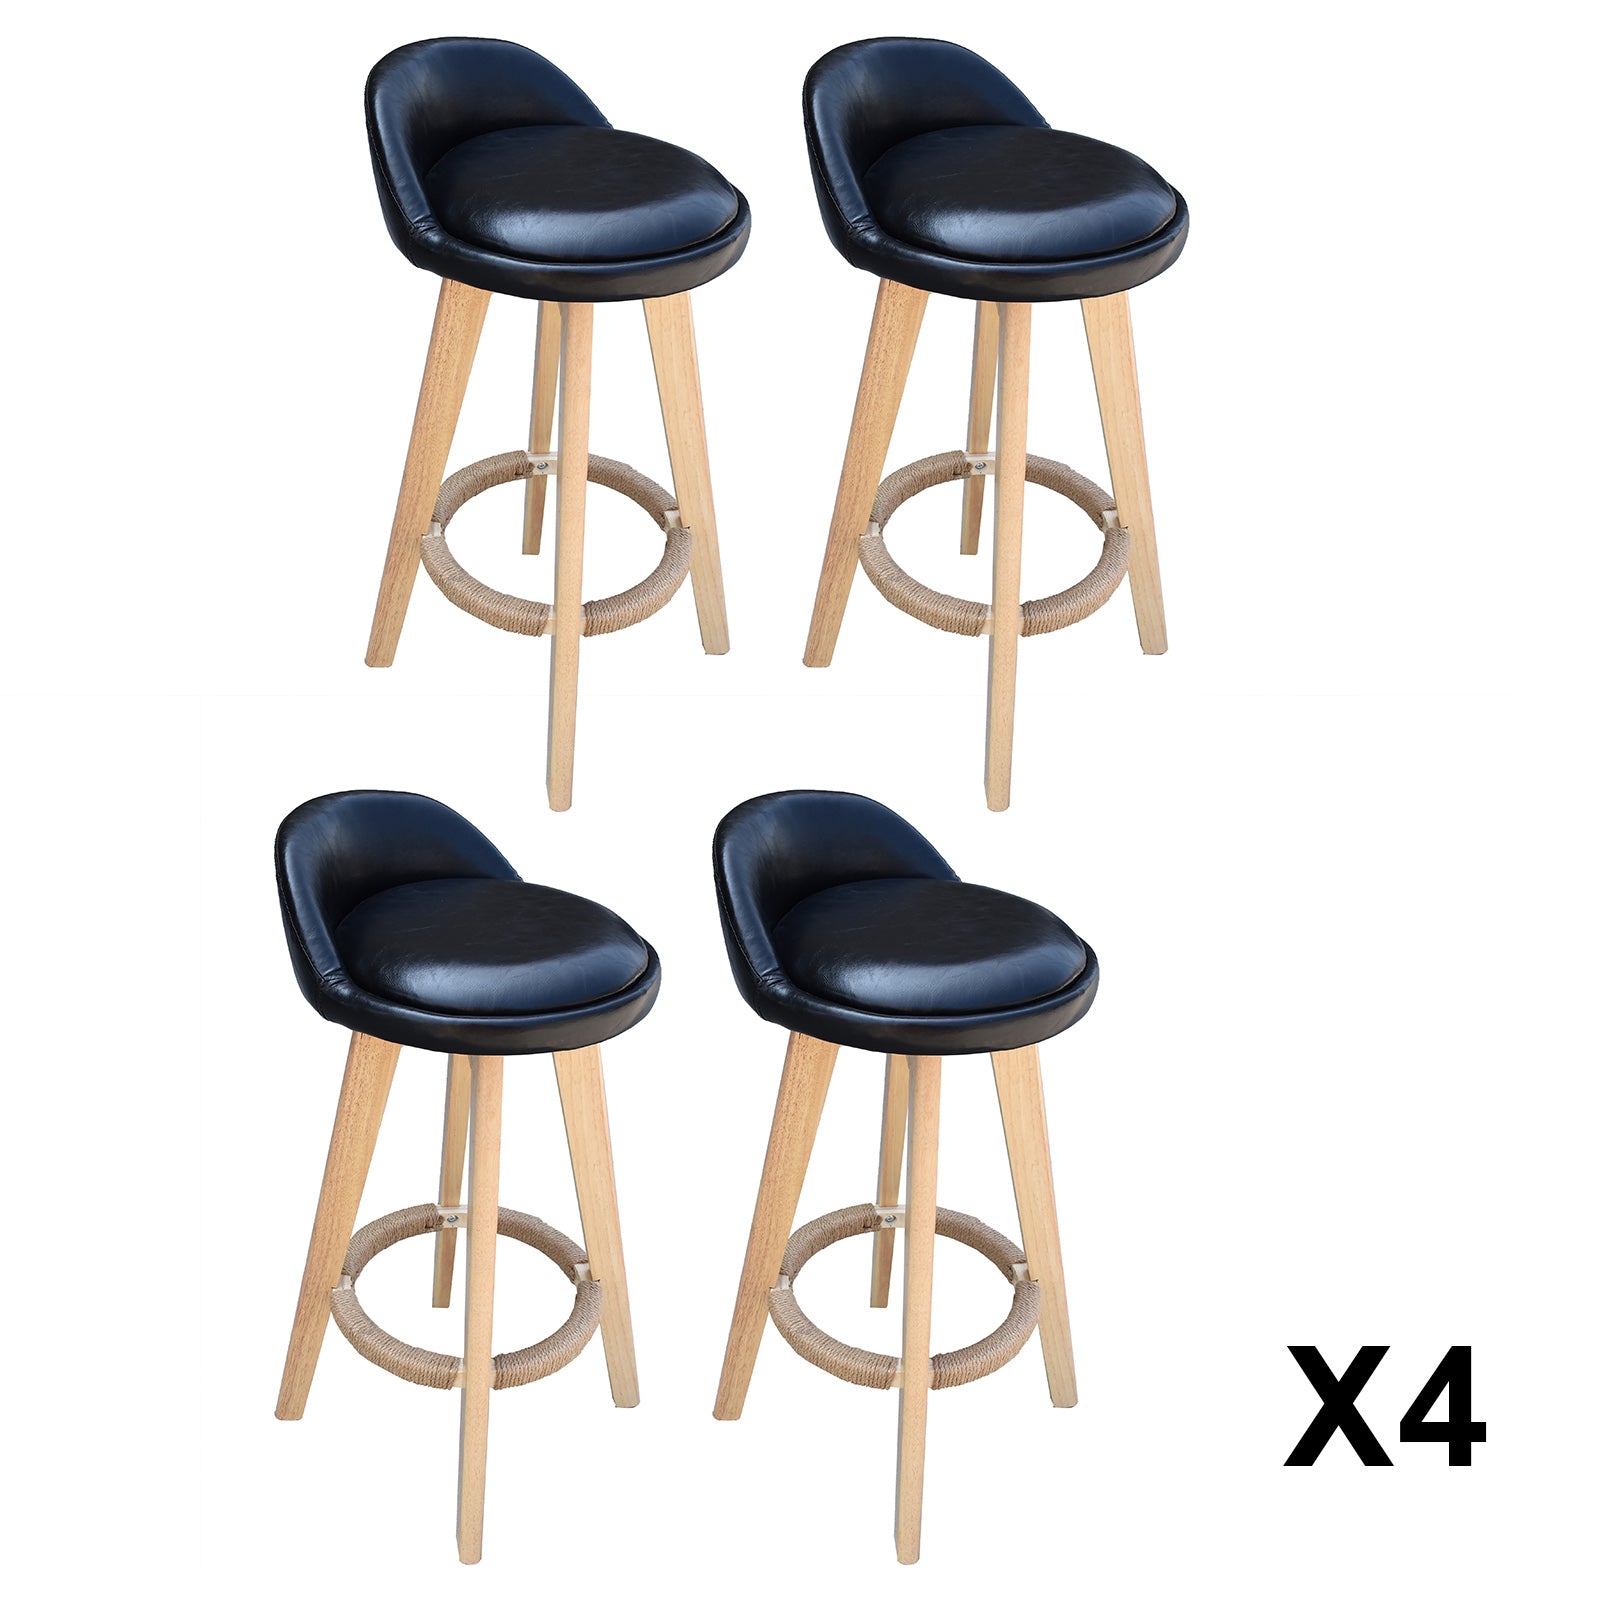 Milano Decor Phoenix Barstool Black Chairs Kitchen Dining Chair Bar Stool - Four Pack - Black